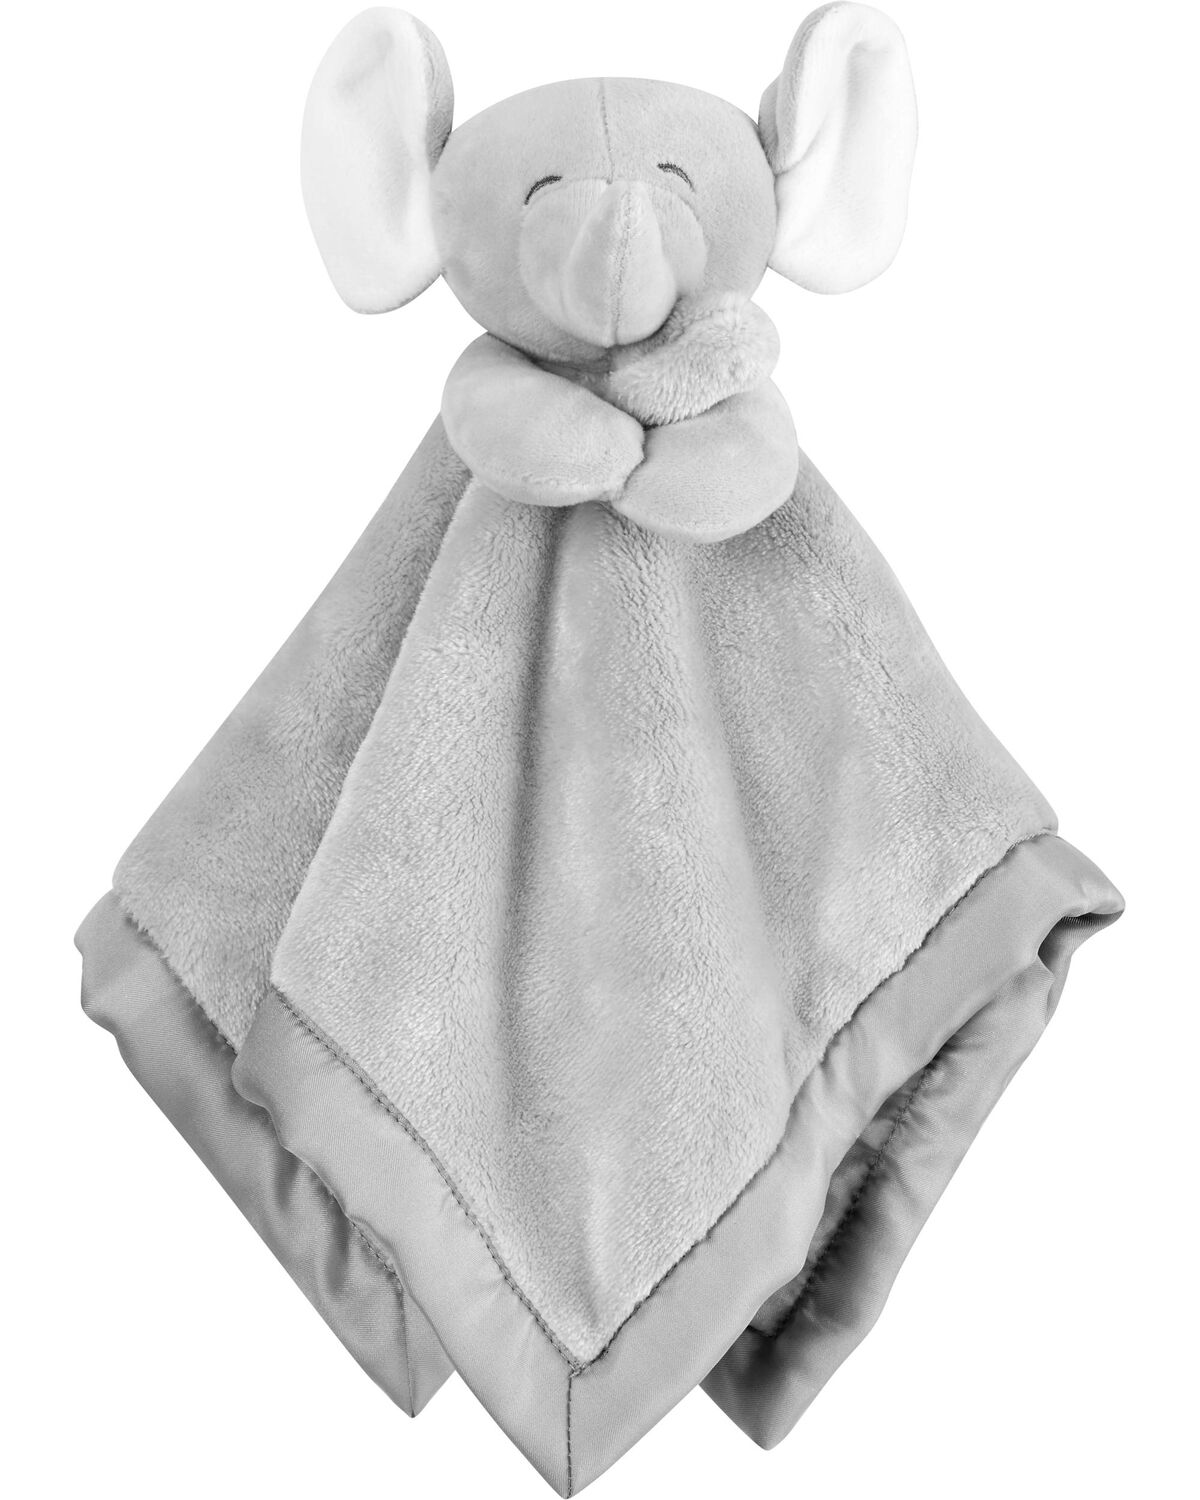 Carters Grey Baby Elephant Plush Lovey